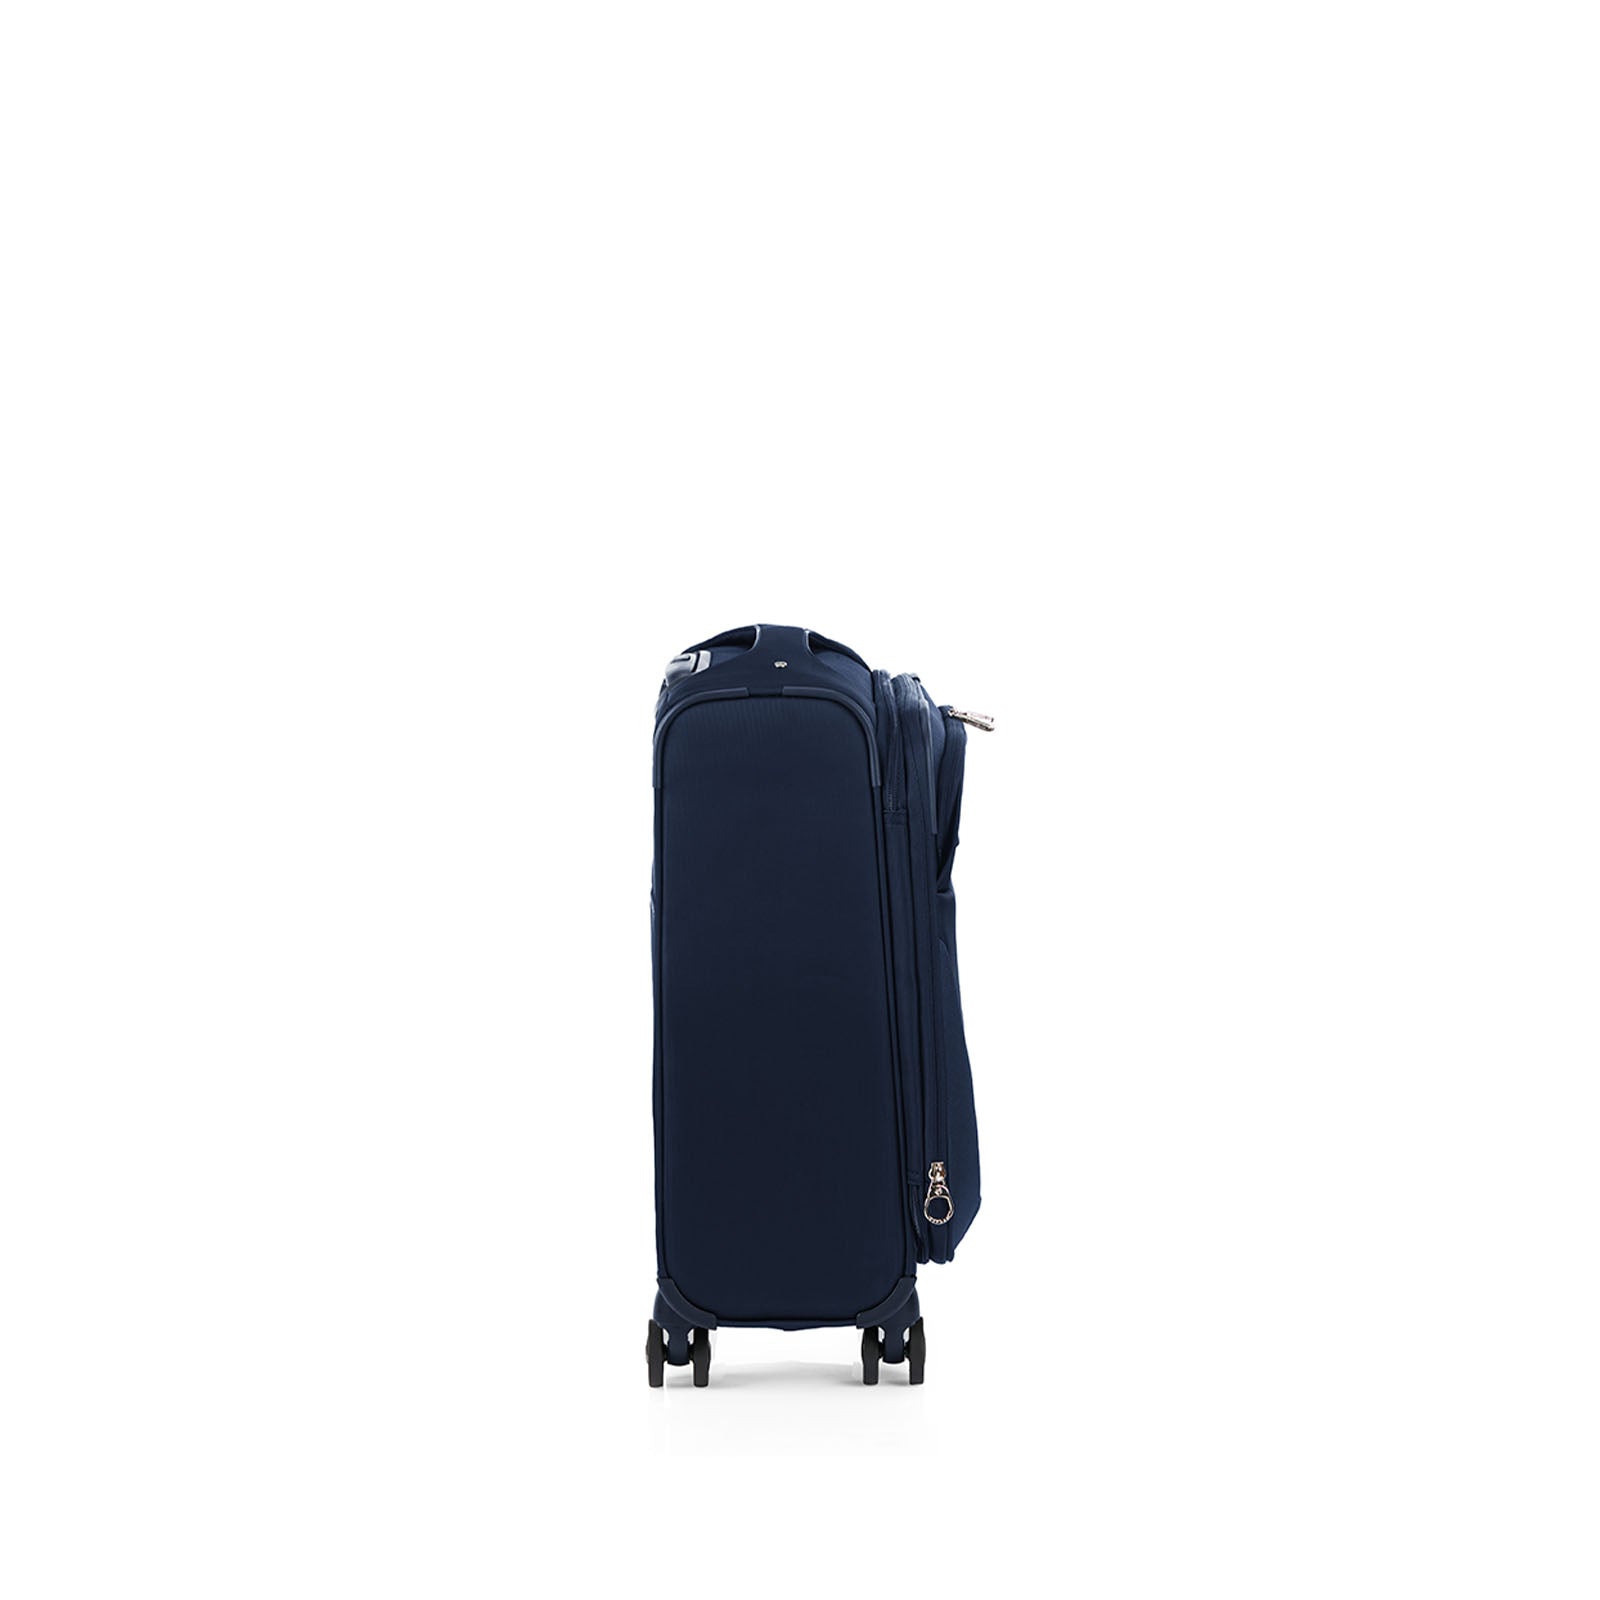 Samsonite-B-Lite-5-55cm-Suitcase-Navy-Side